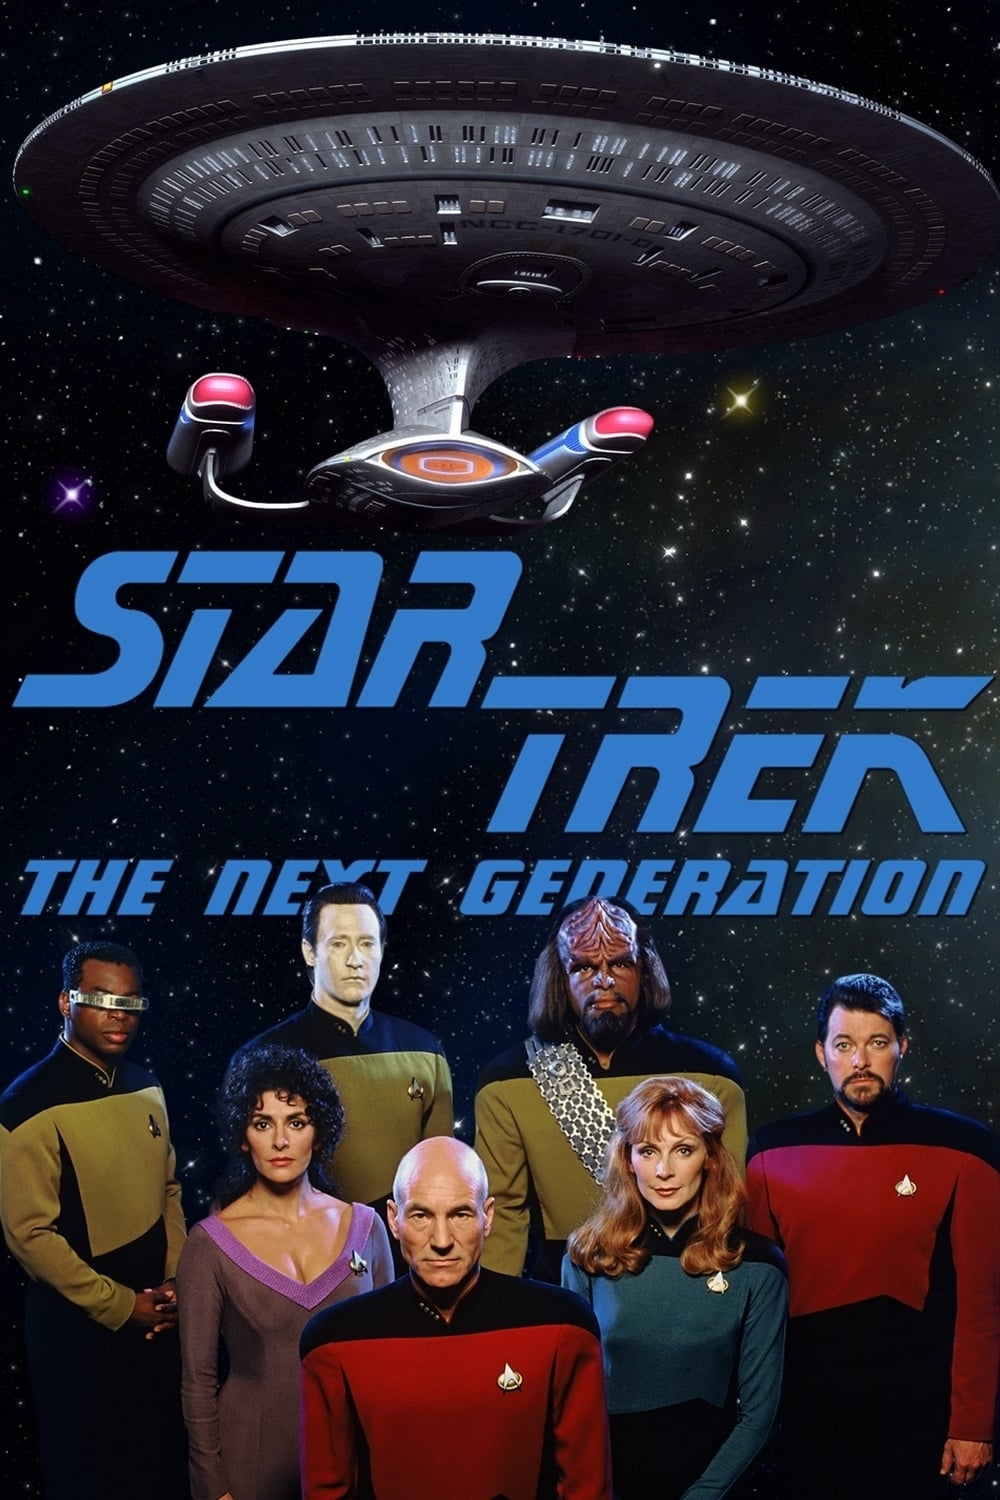 Star Trek Next Generation Episode Guide